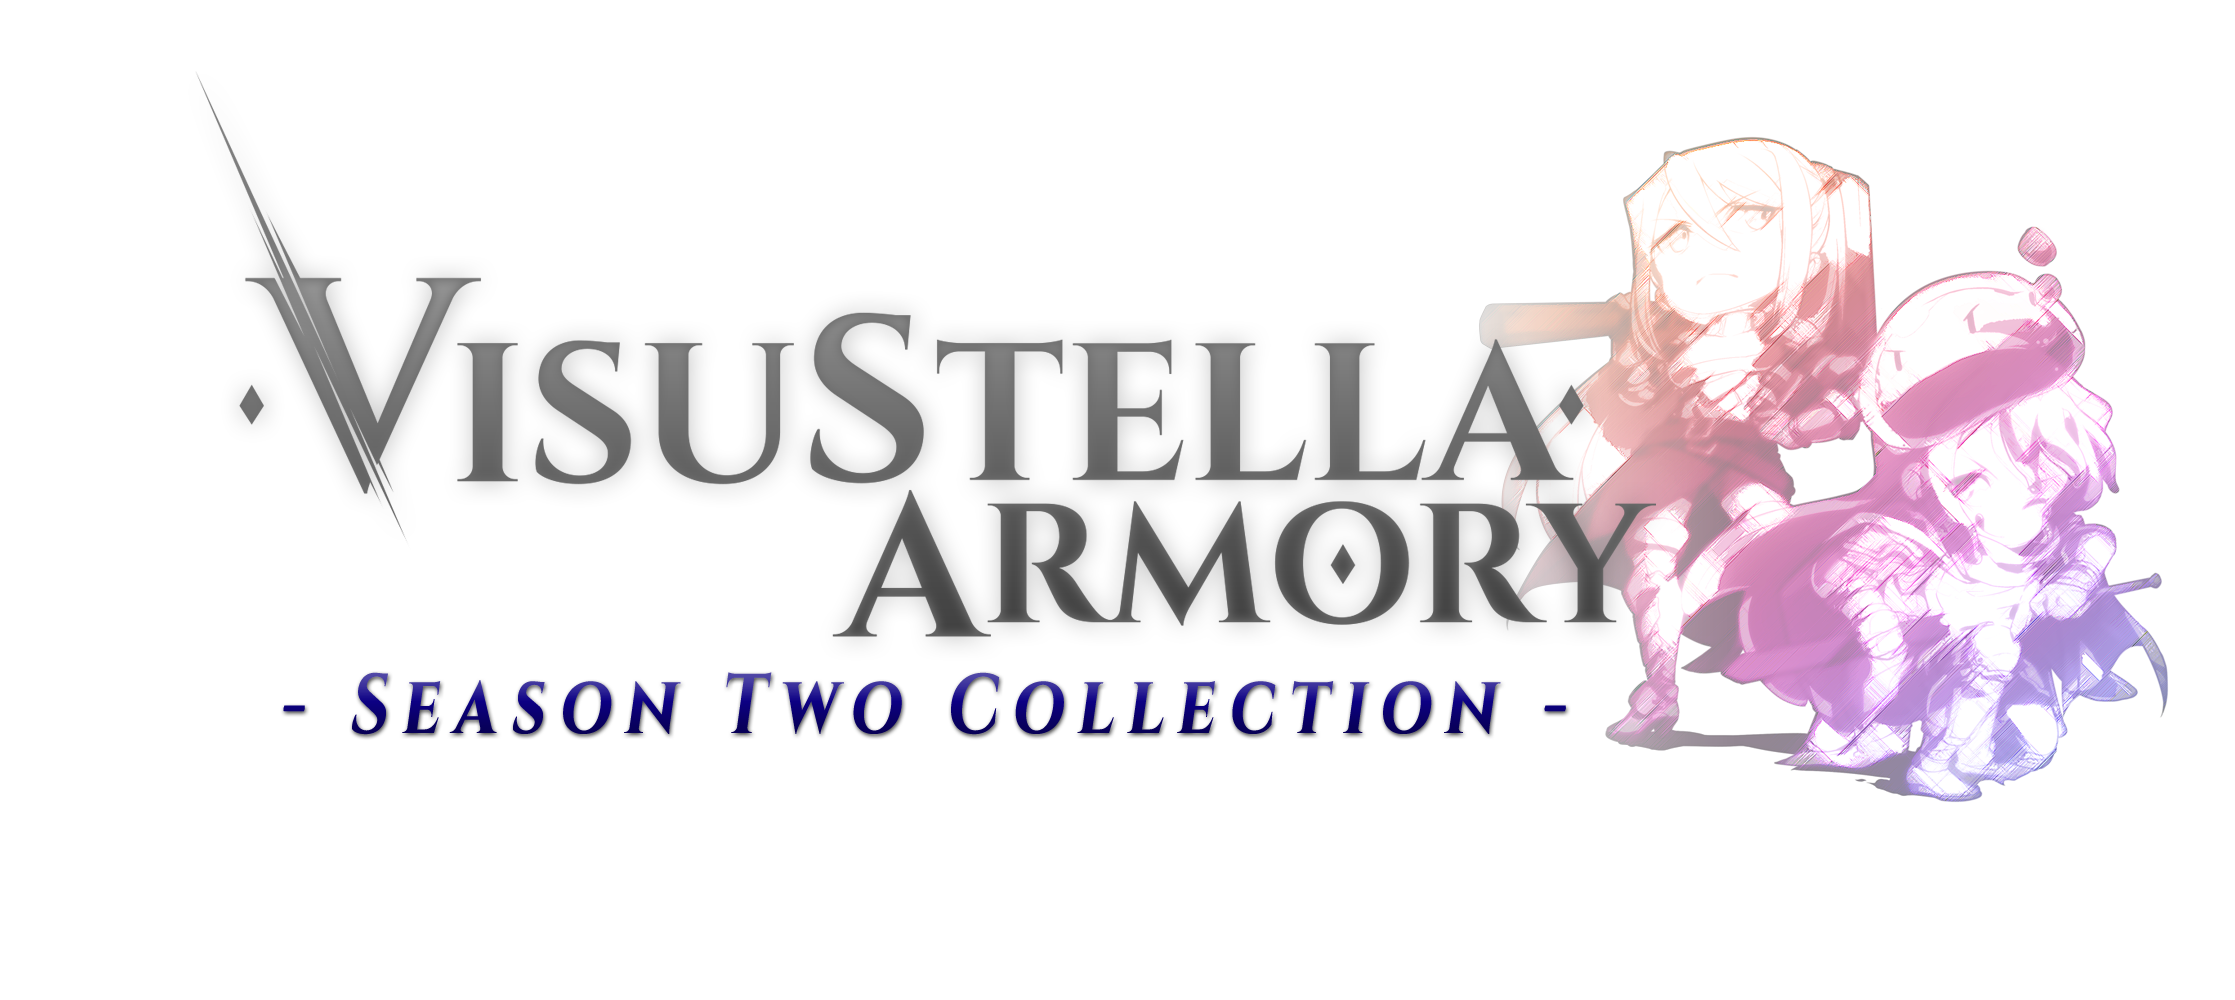 [✦] VisuStella Armory Season Two Collection